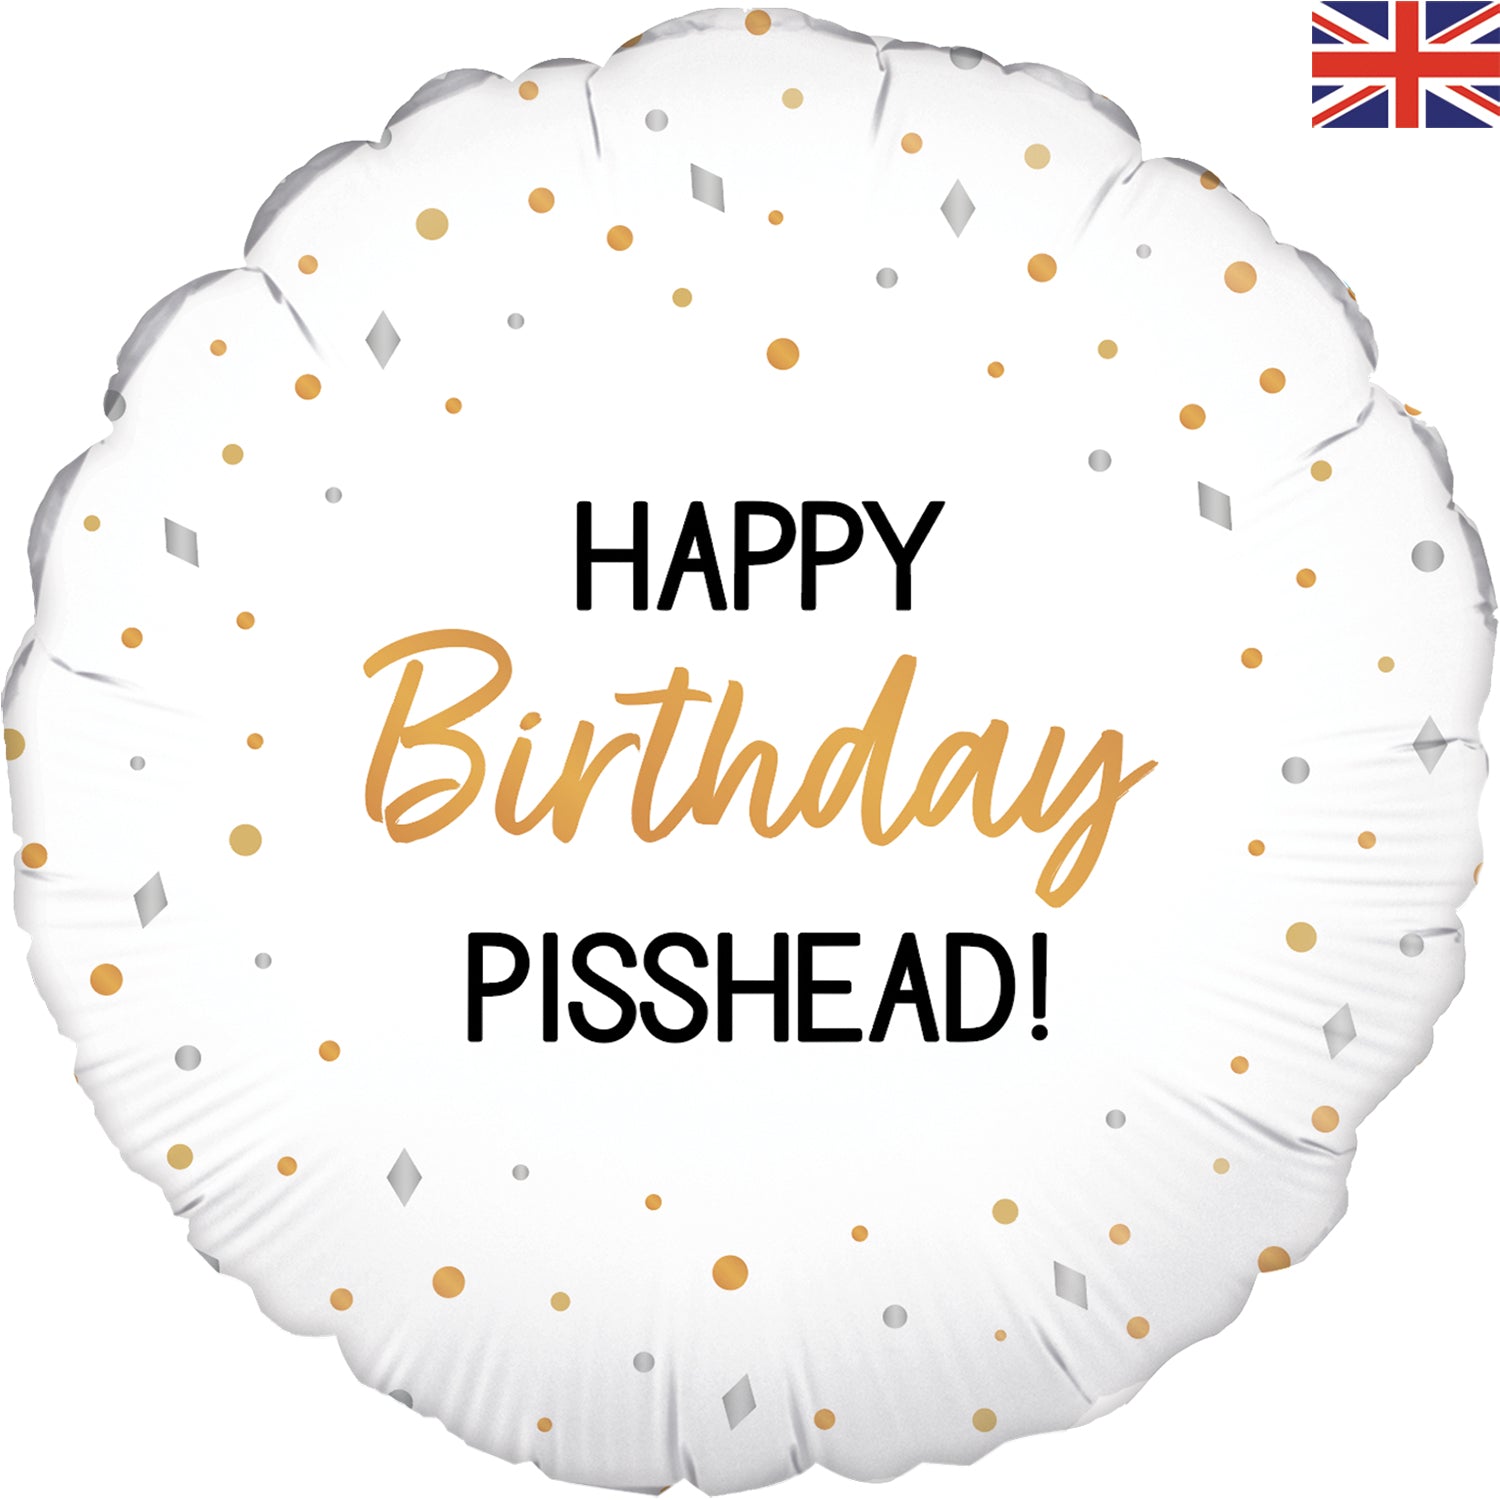 Pisshead Birthday Balloon